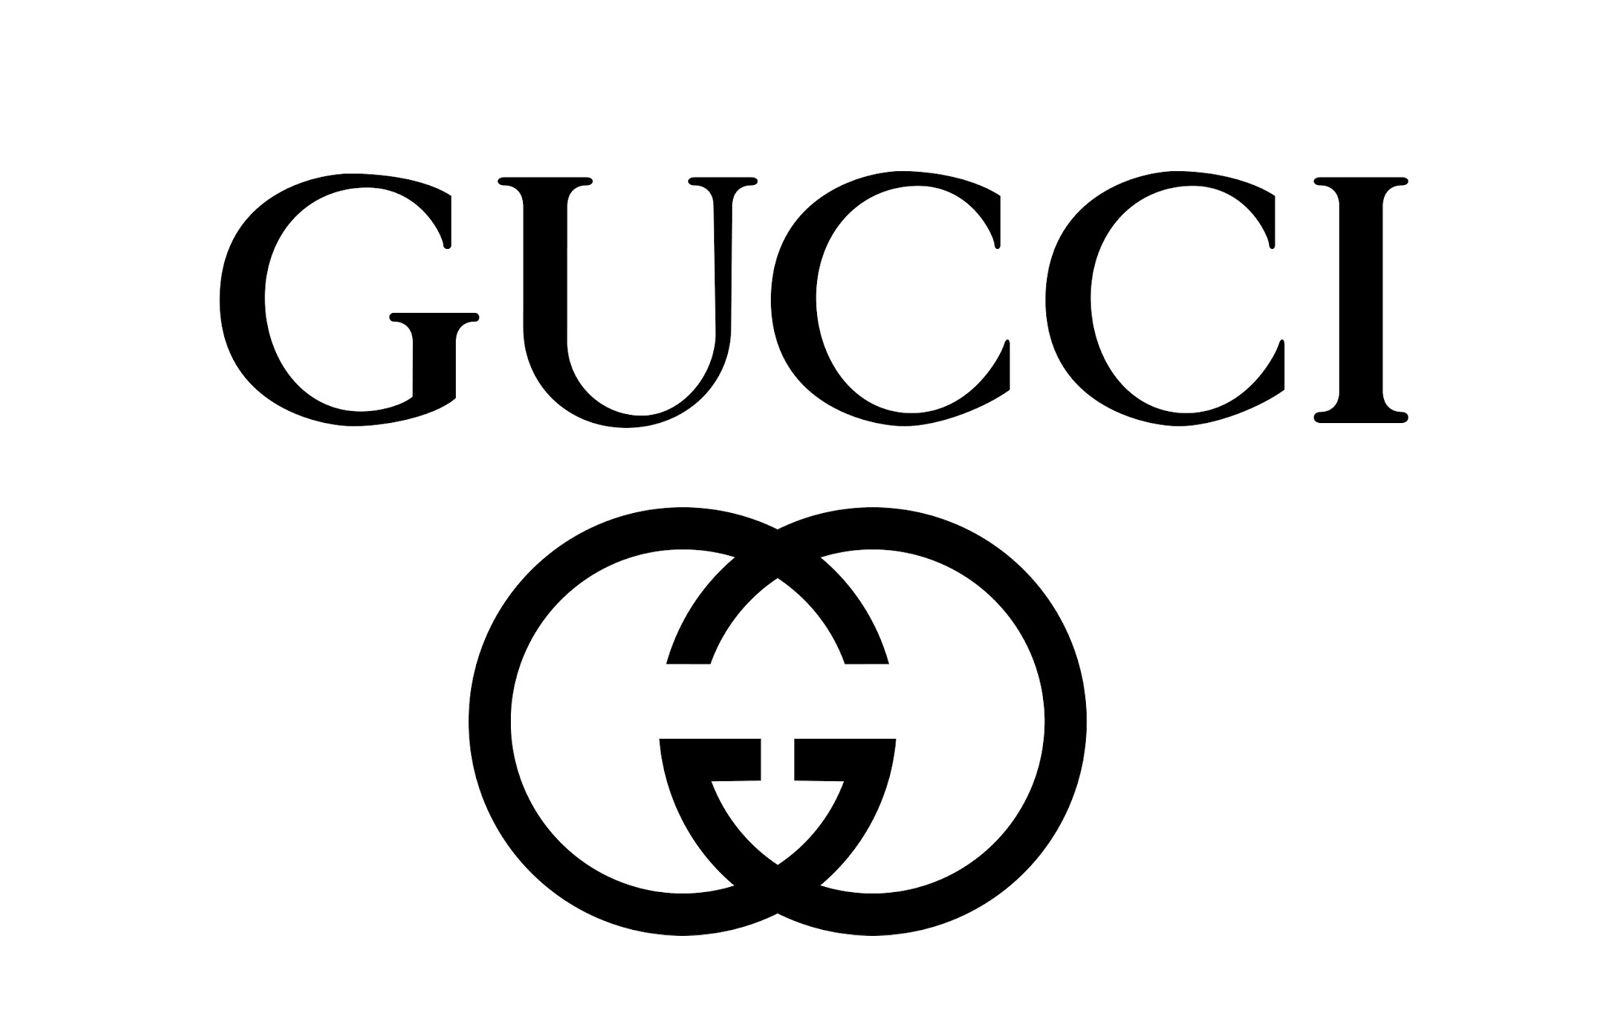 лого бренда